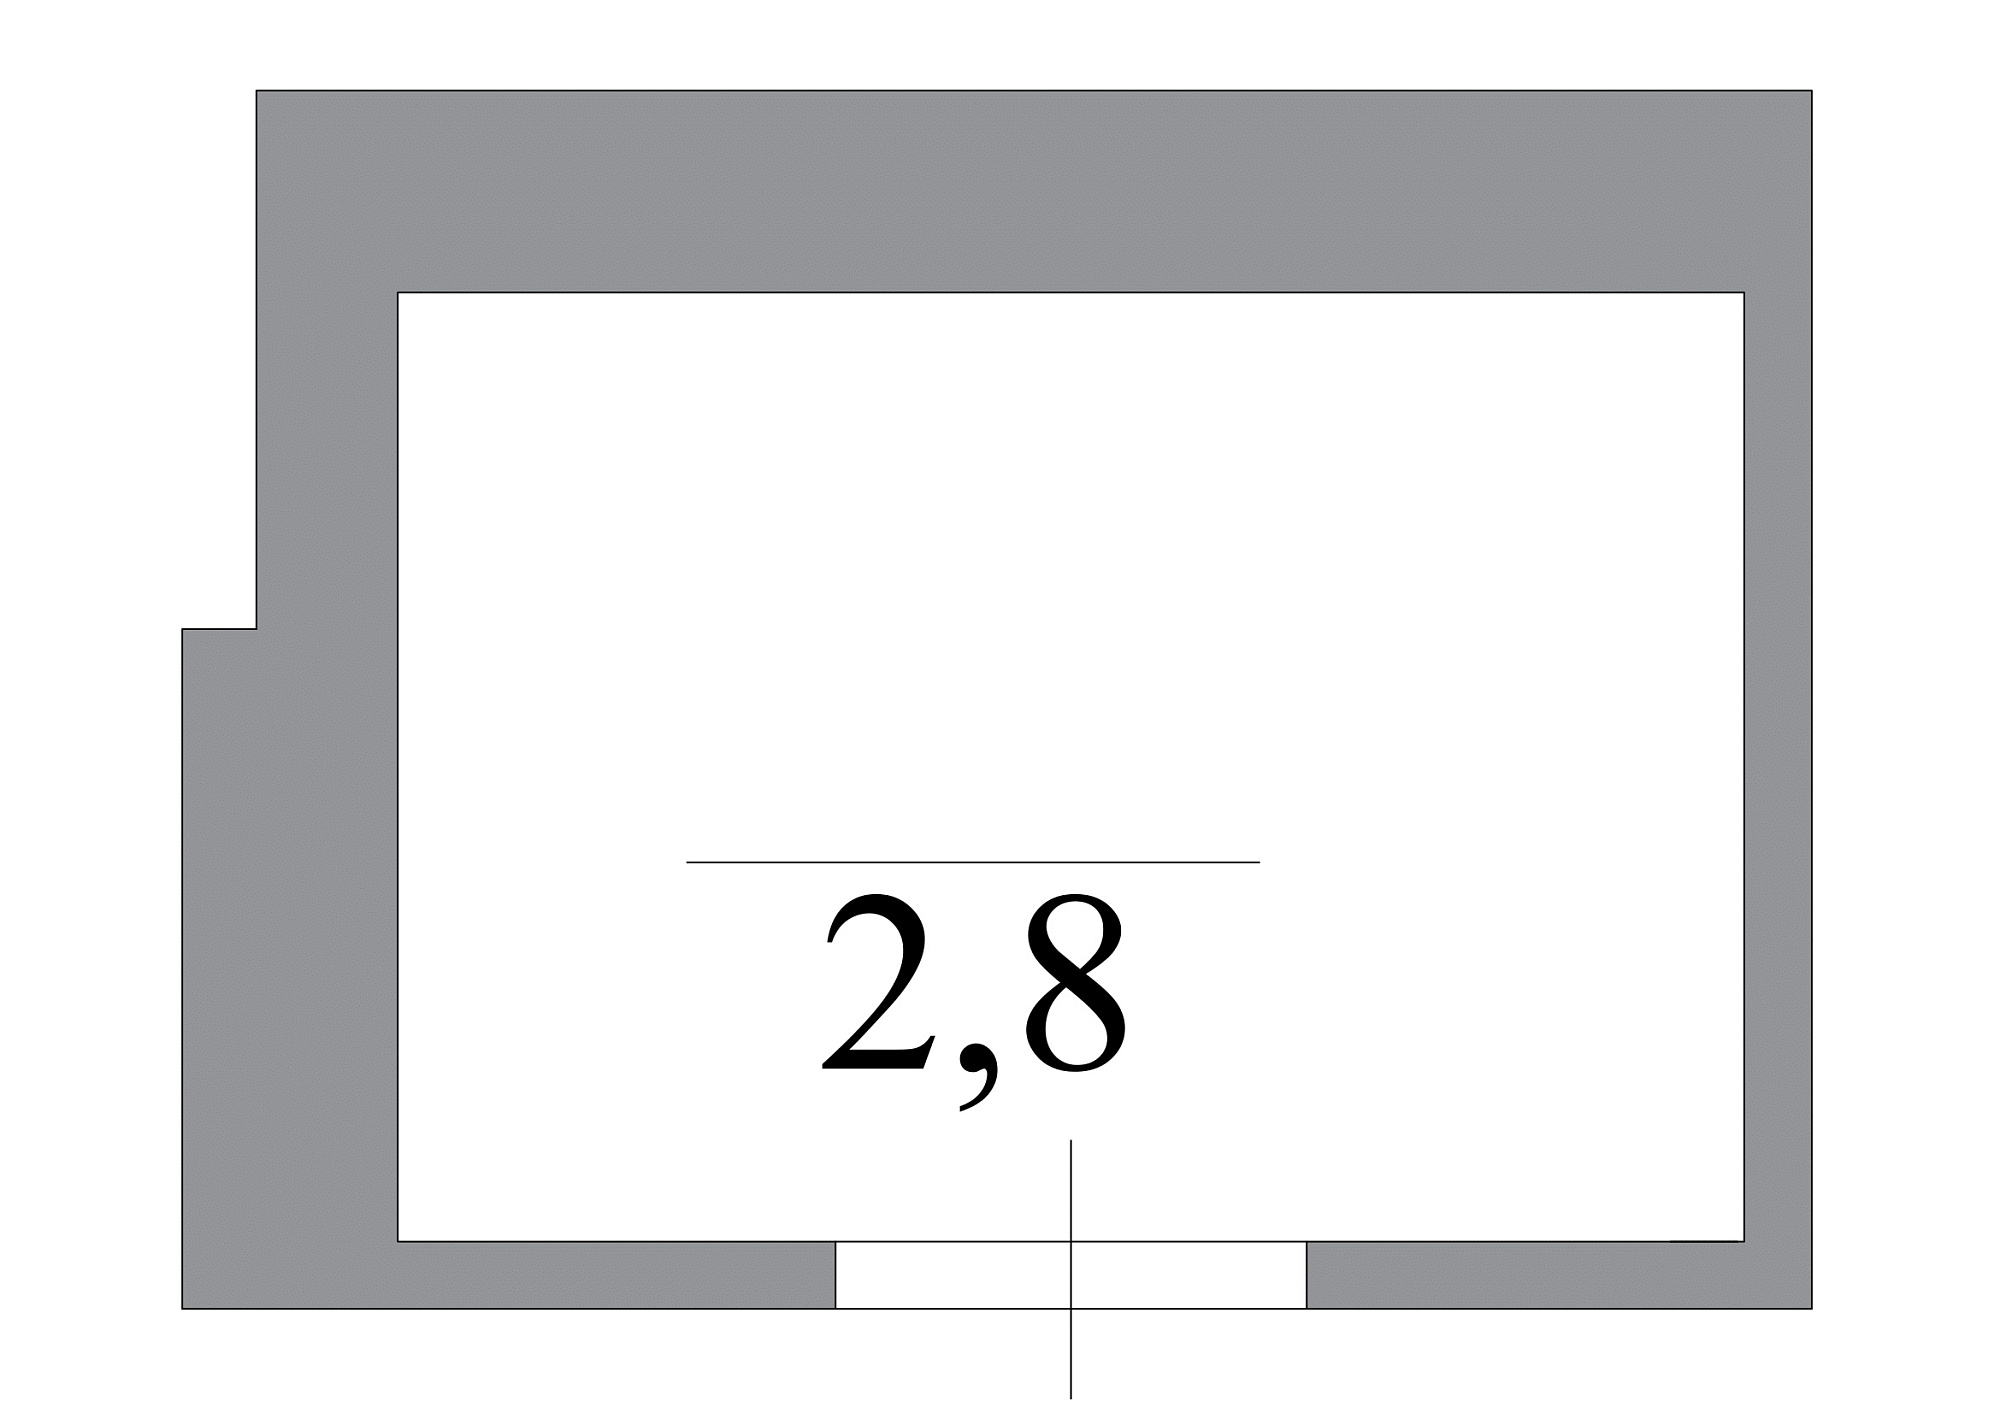 Planning Storeroom area 2.8m2, AB-07-м1/К0041.